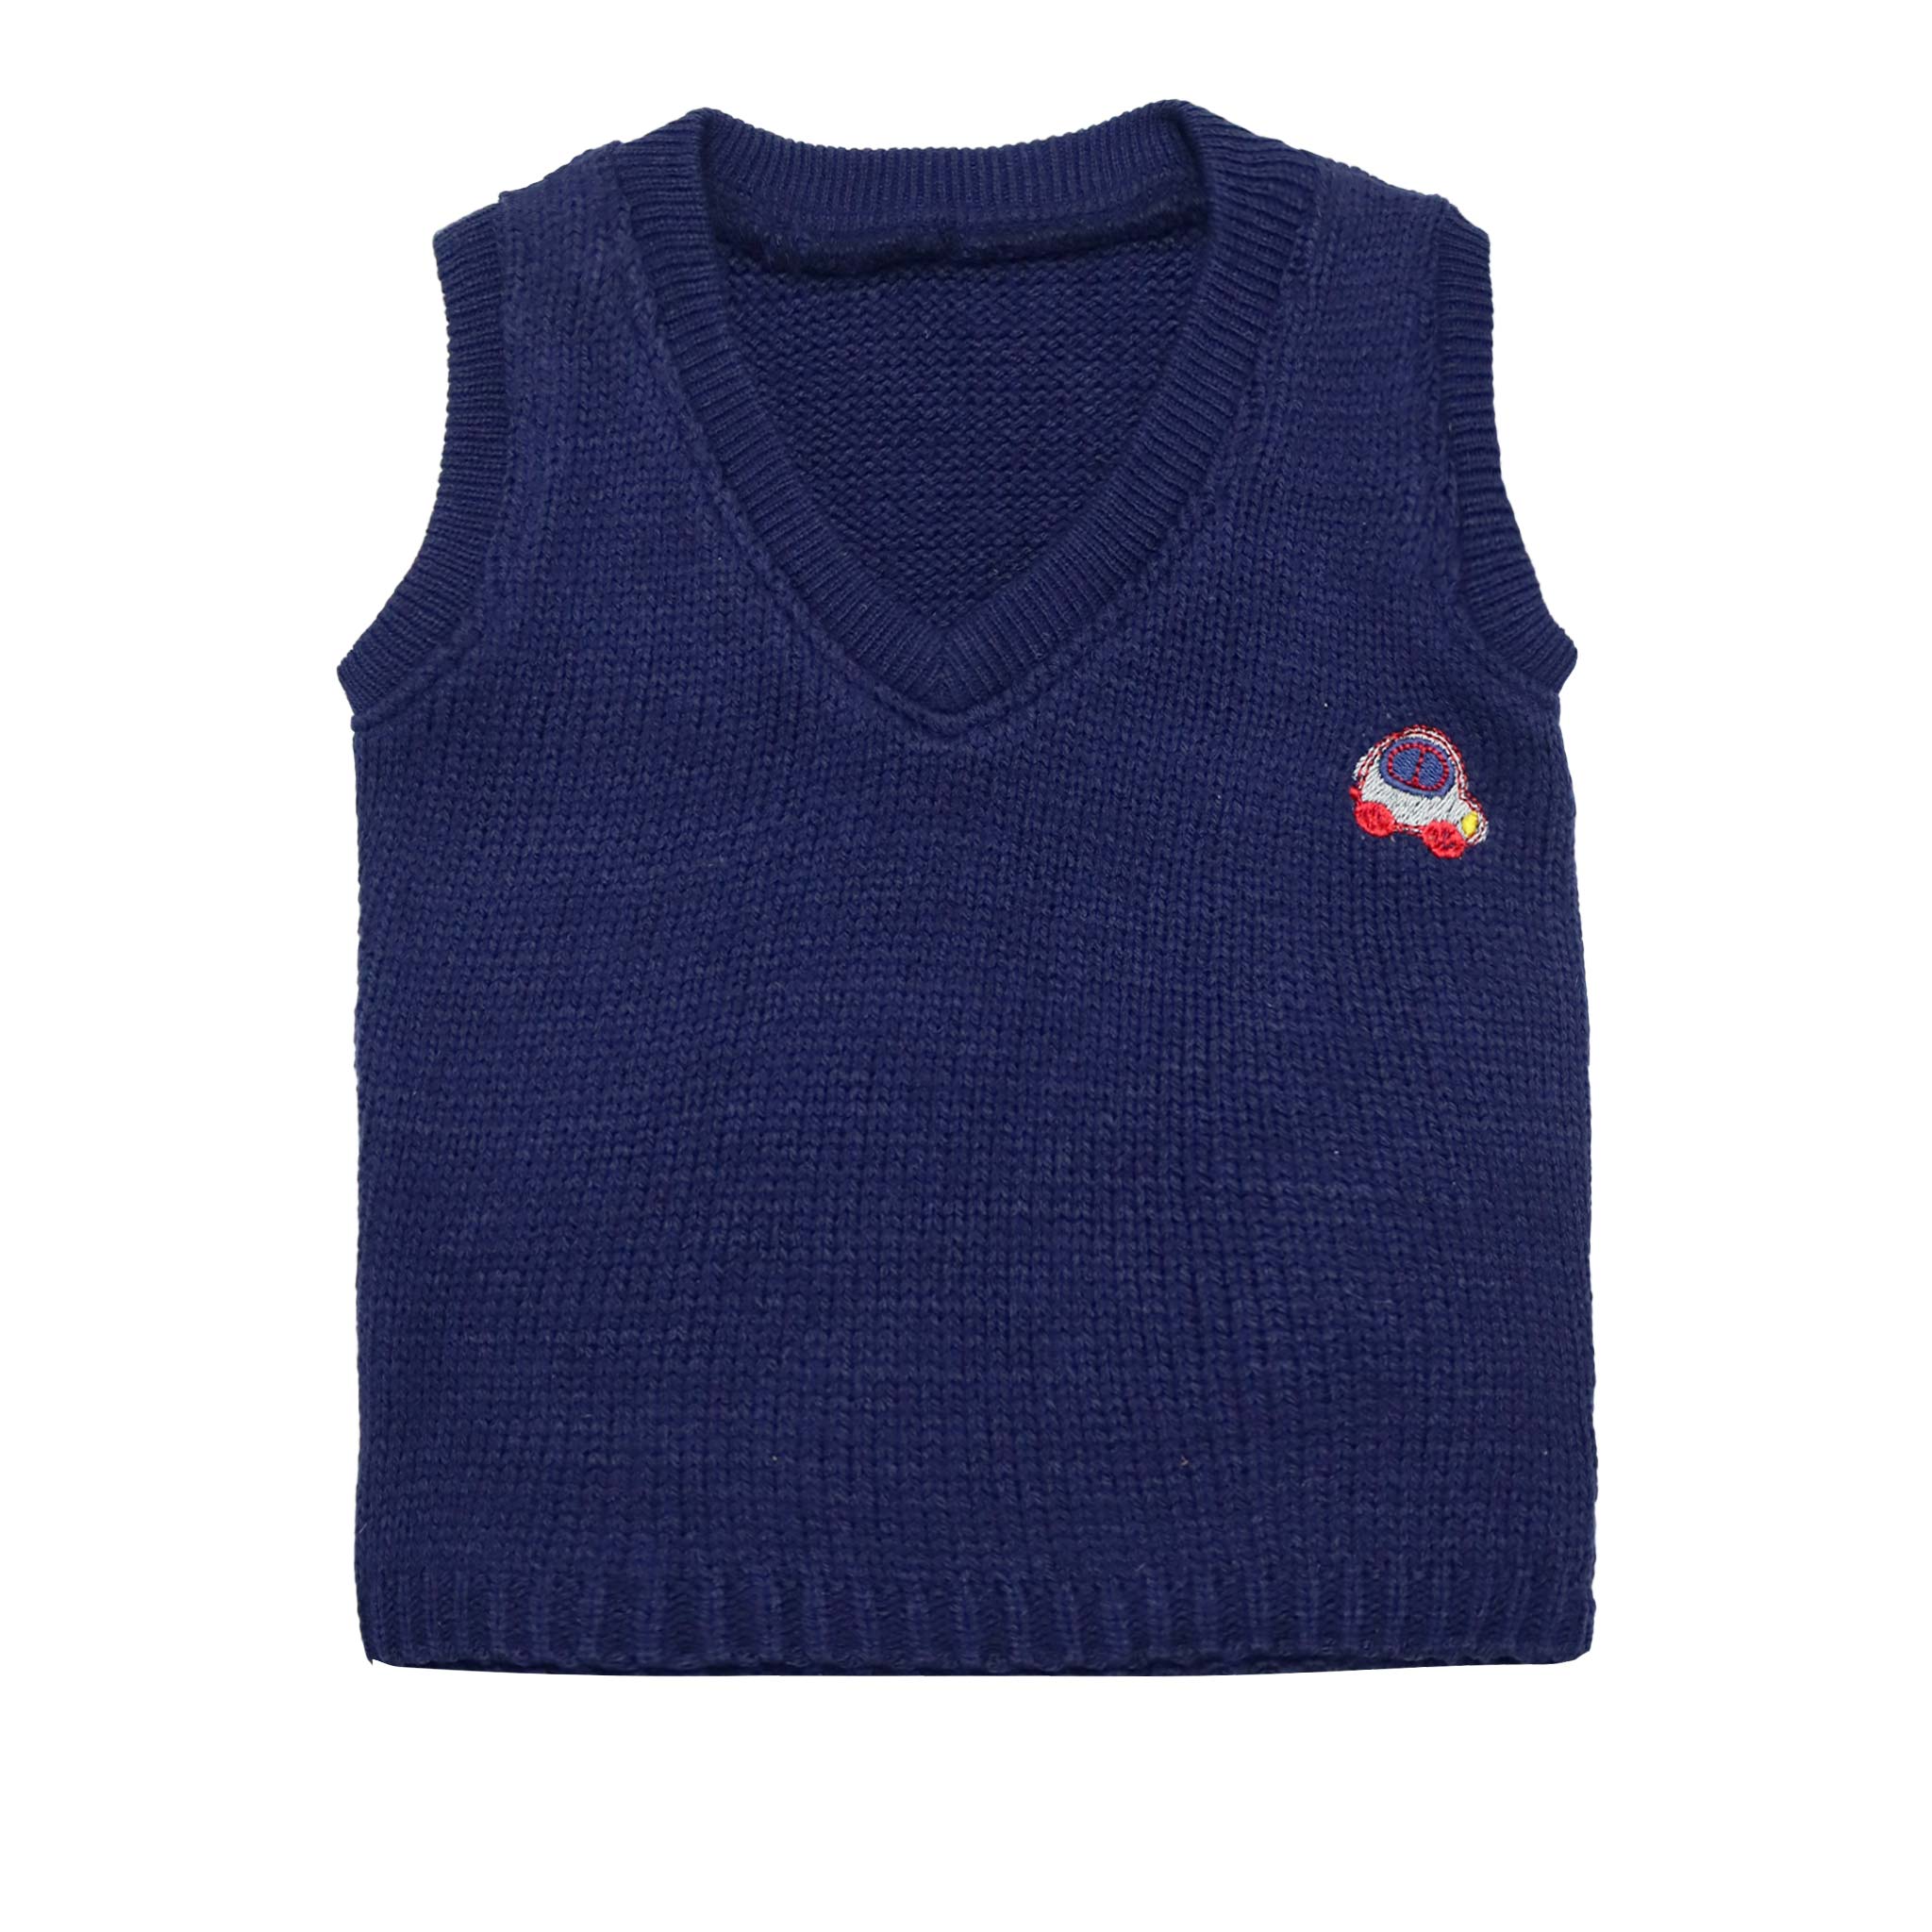 Sweater V-Neck Sleeveless Dark Blue Color by Little Darling